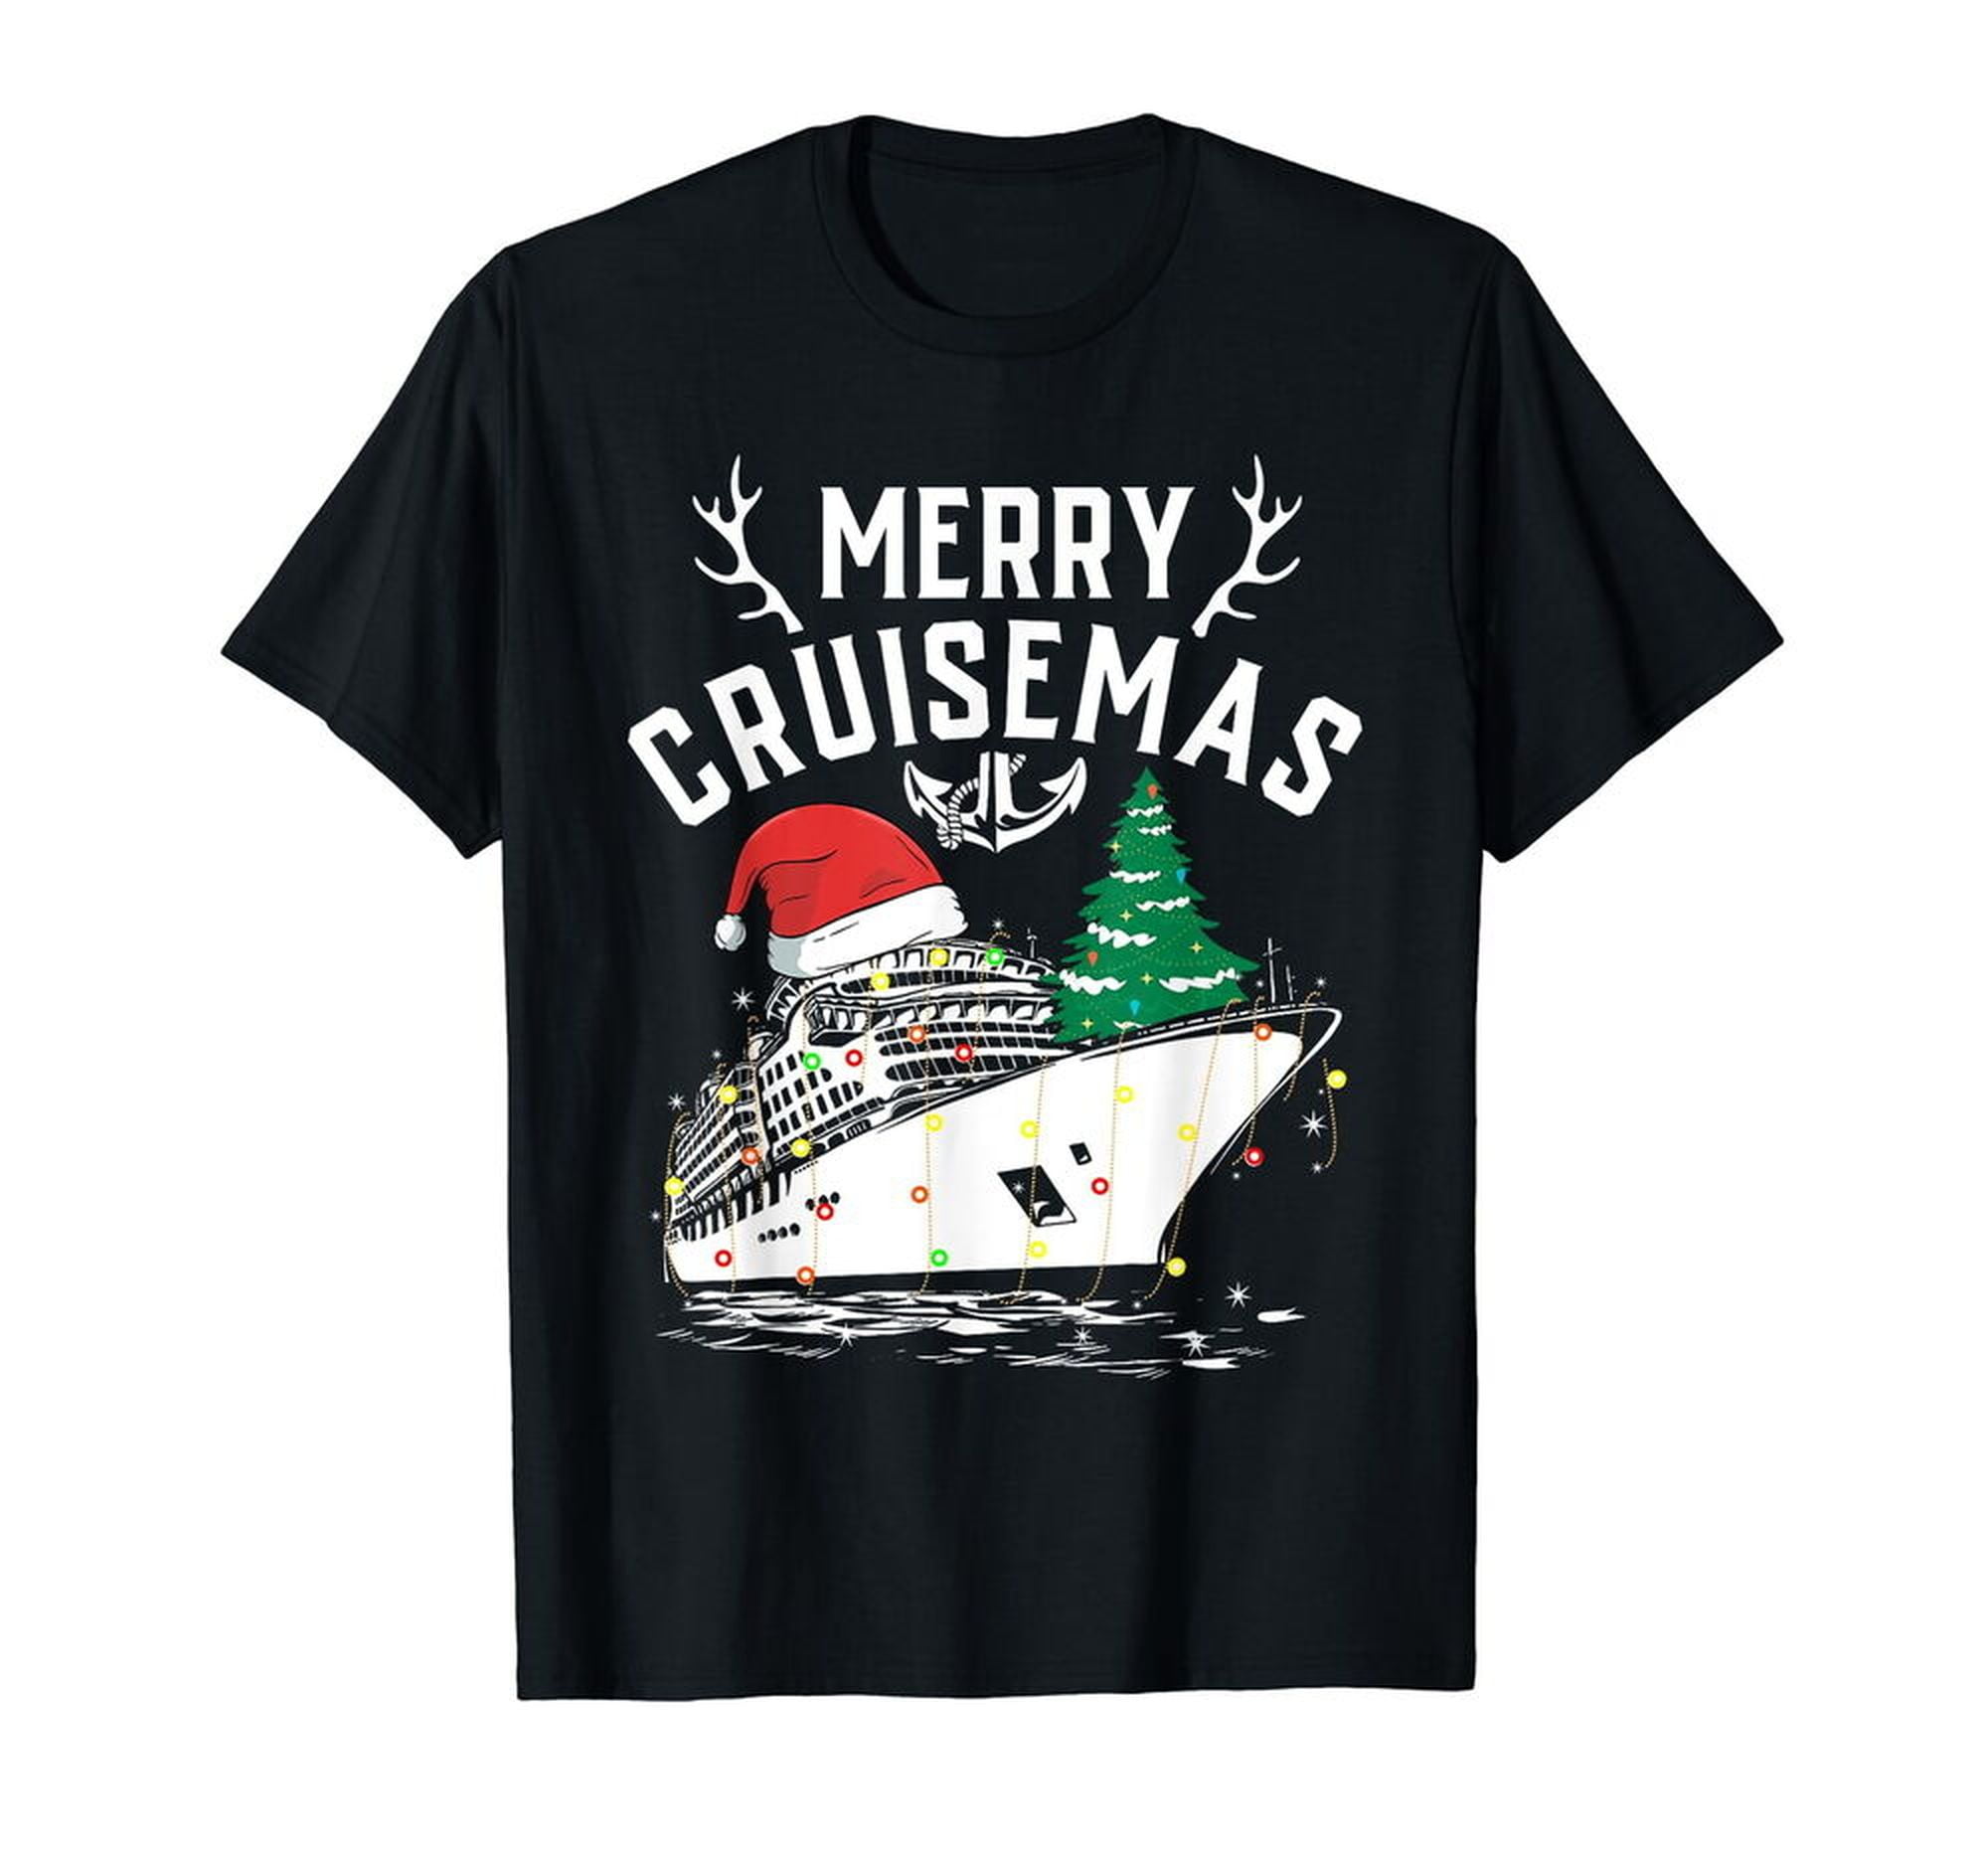 Merry Cruisemas Family Tee: Funny Christmas Shirt for Cruise Ship ...